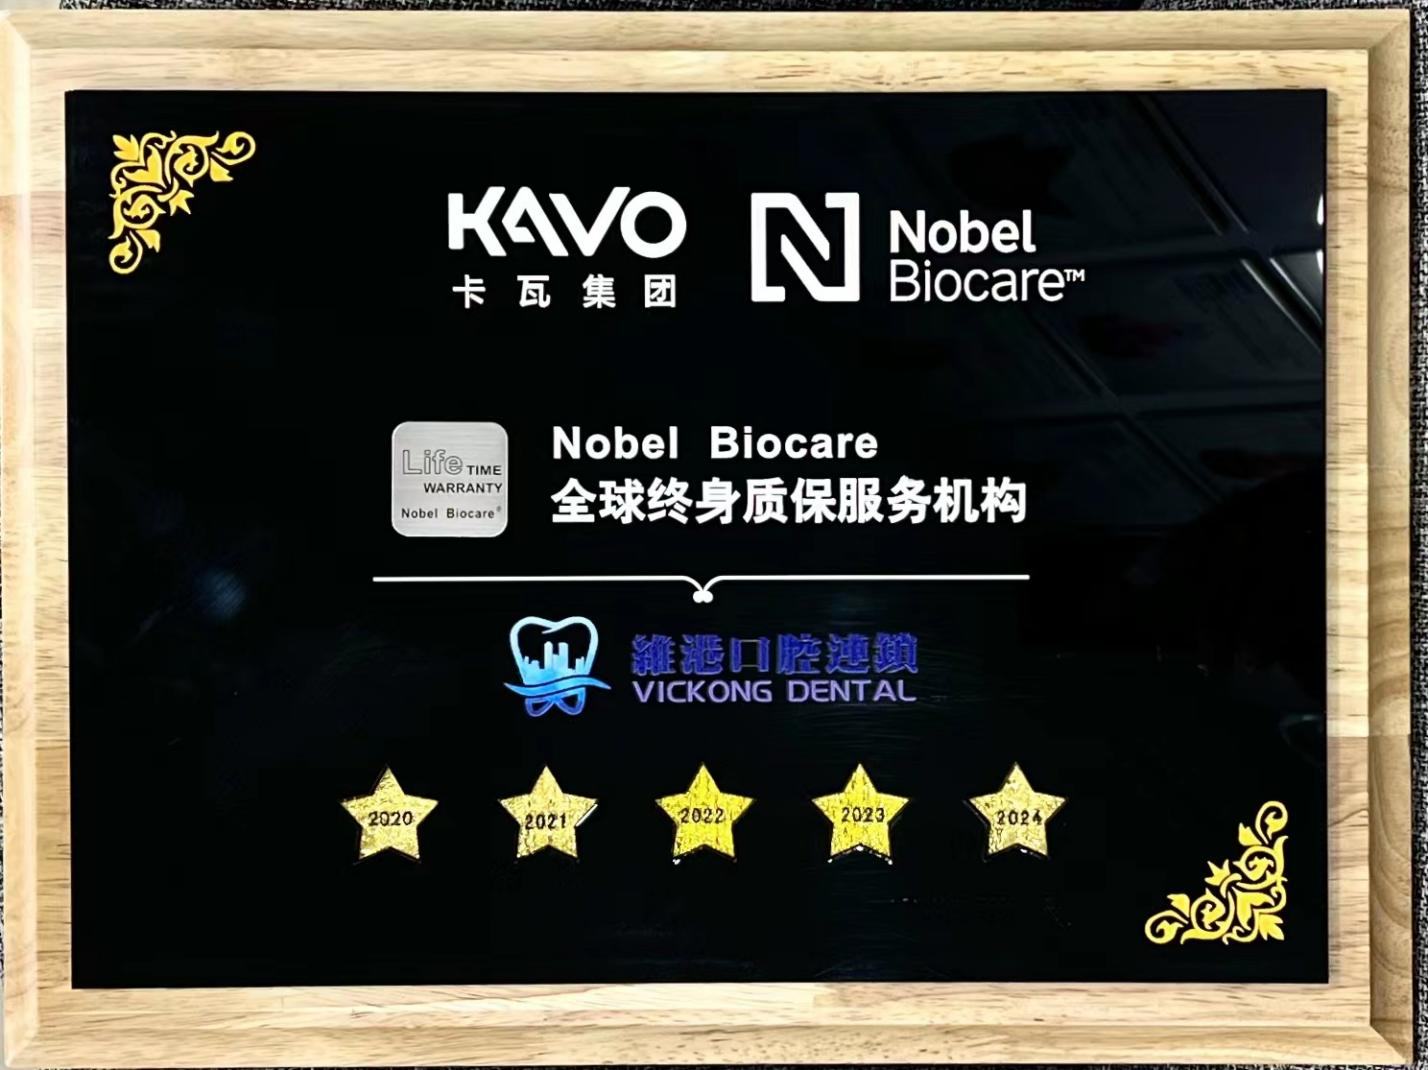 Nobel China President awarded the "Nobel Global Trust Dental Implant Center" certification to Victoria Harbour Dental